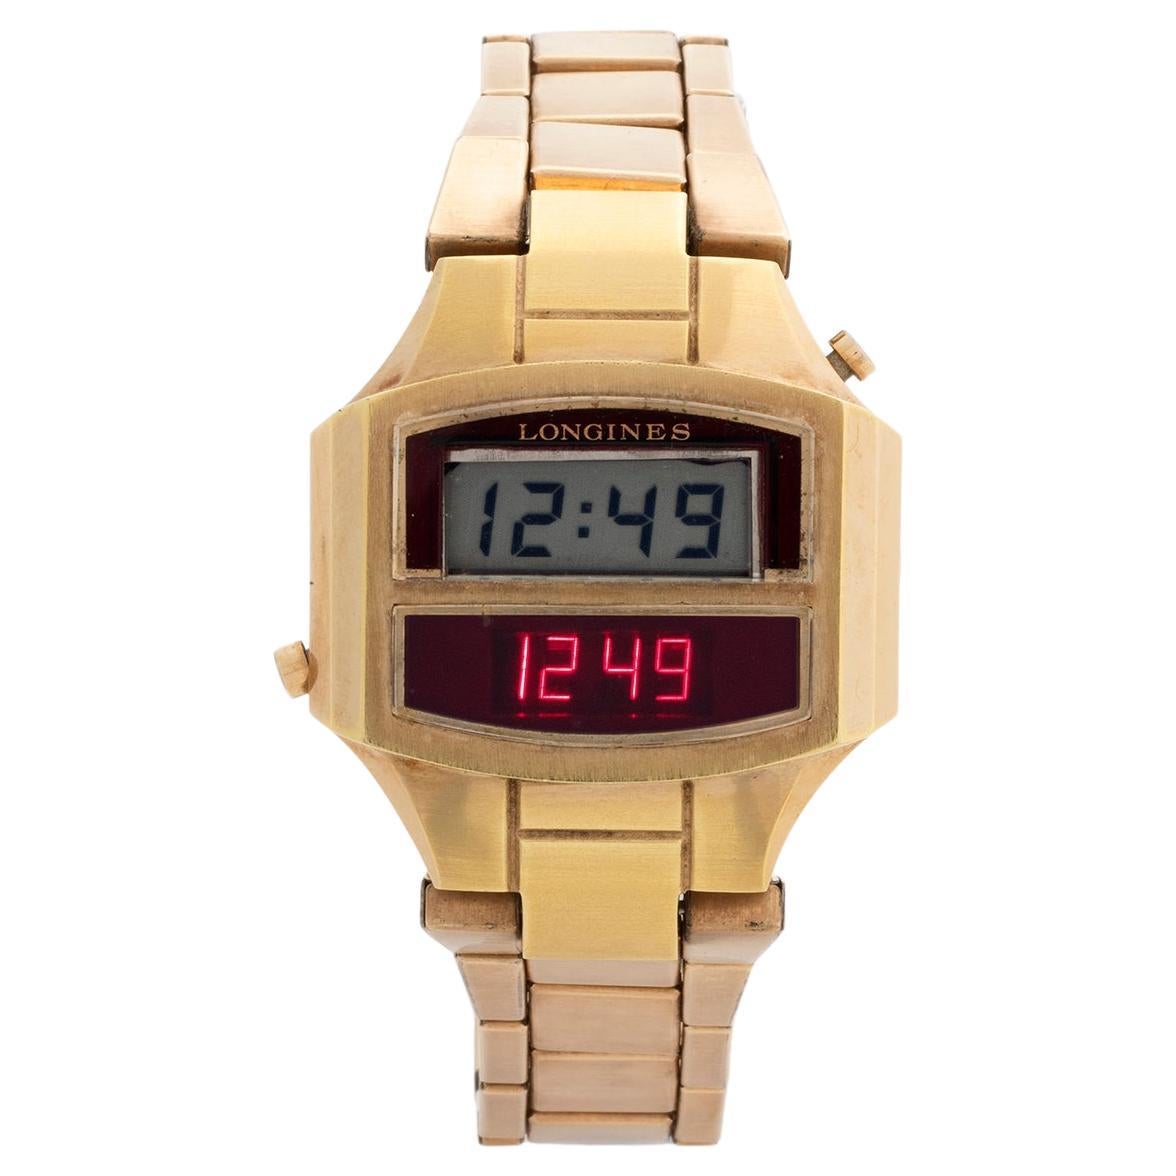 Longines Gemini 11 Digital Wristwatch, Gold Plated, Very Rare, c 1976. For Sale